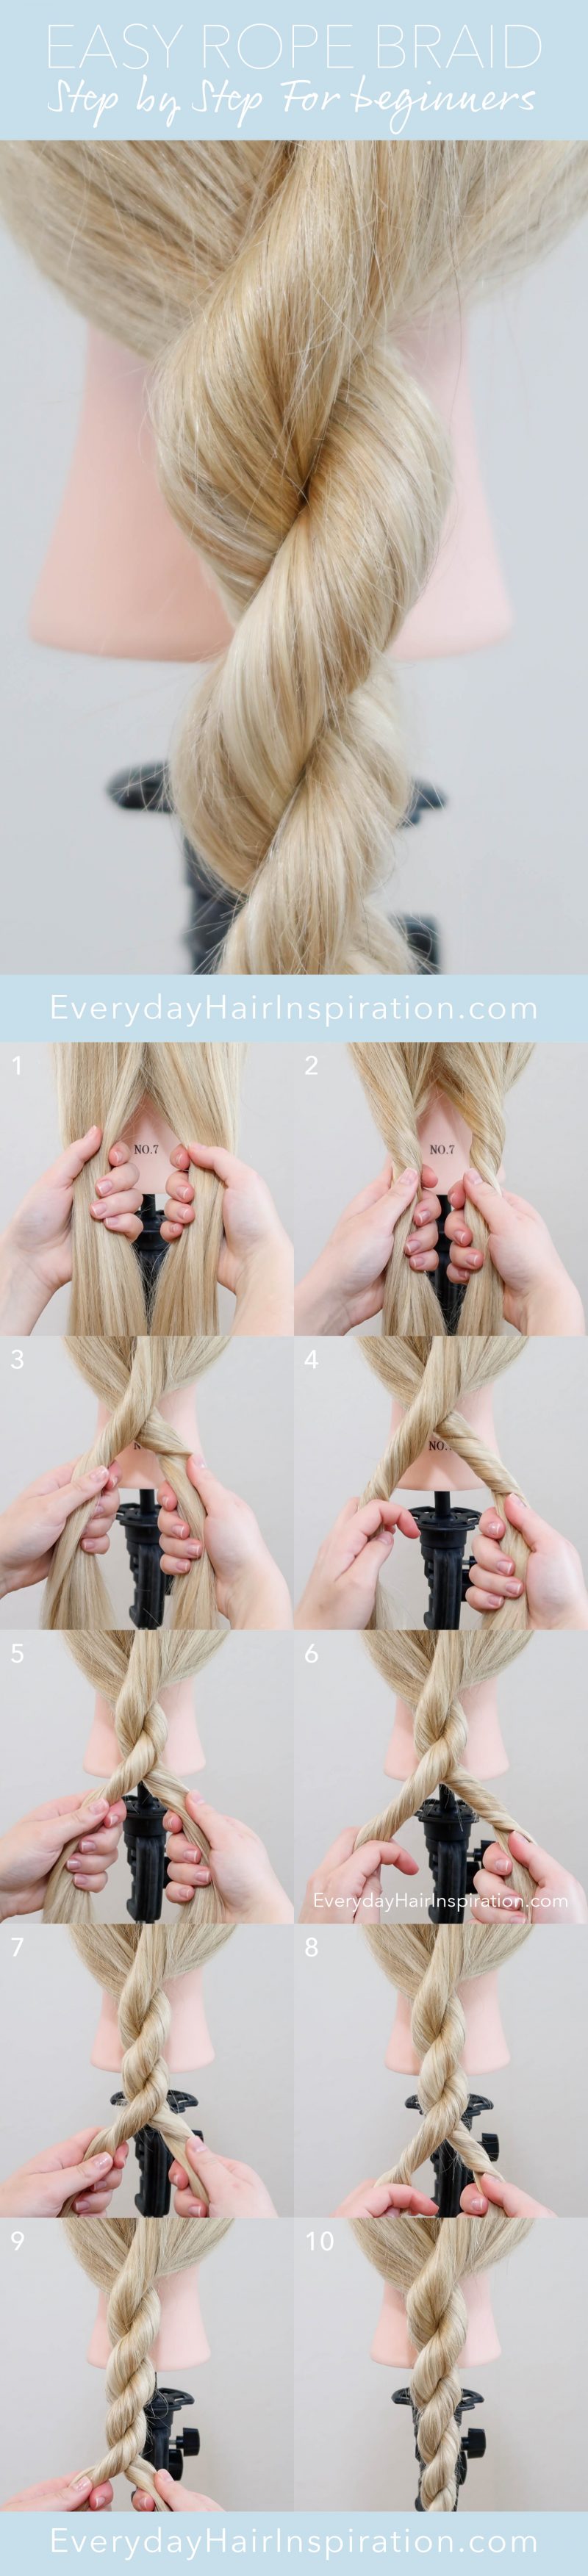 Rope Braid For Complete Beginners! EASY 3 MINUTE BRAID - Everyday Hair ...